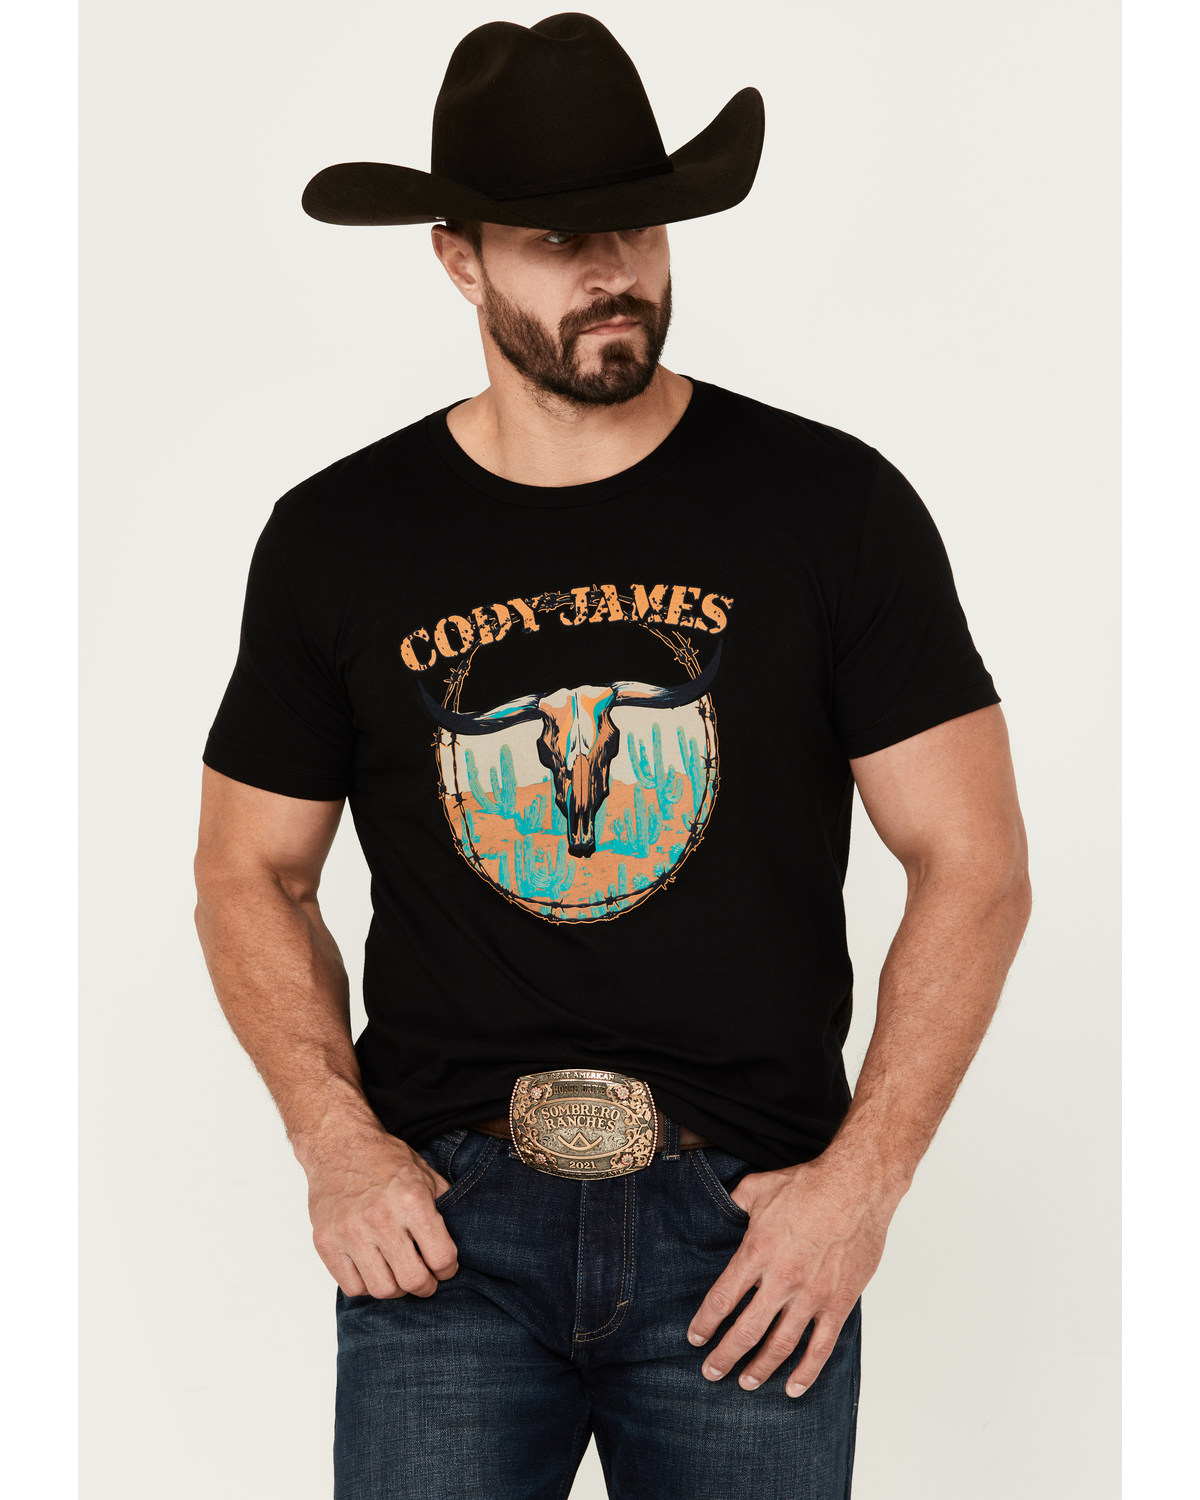 Cody James Men's Skull Cactus Short Sleeve Graphic T-Shirt